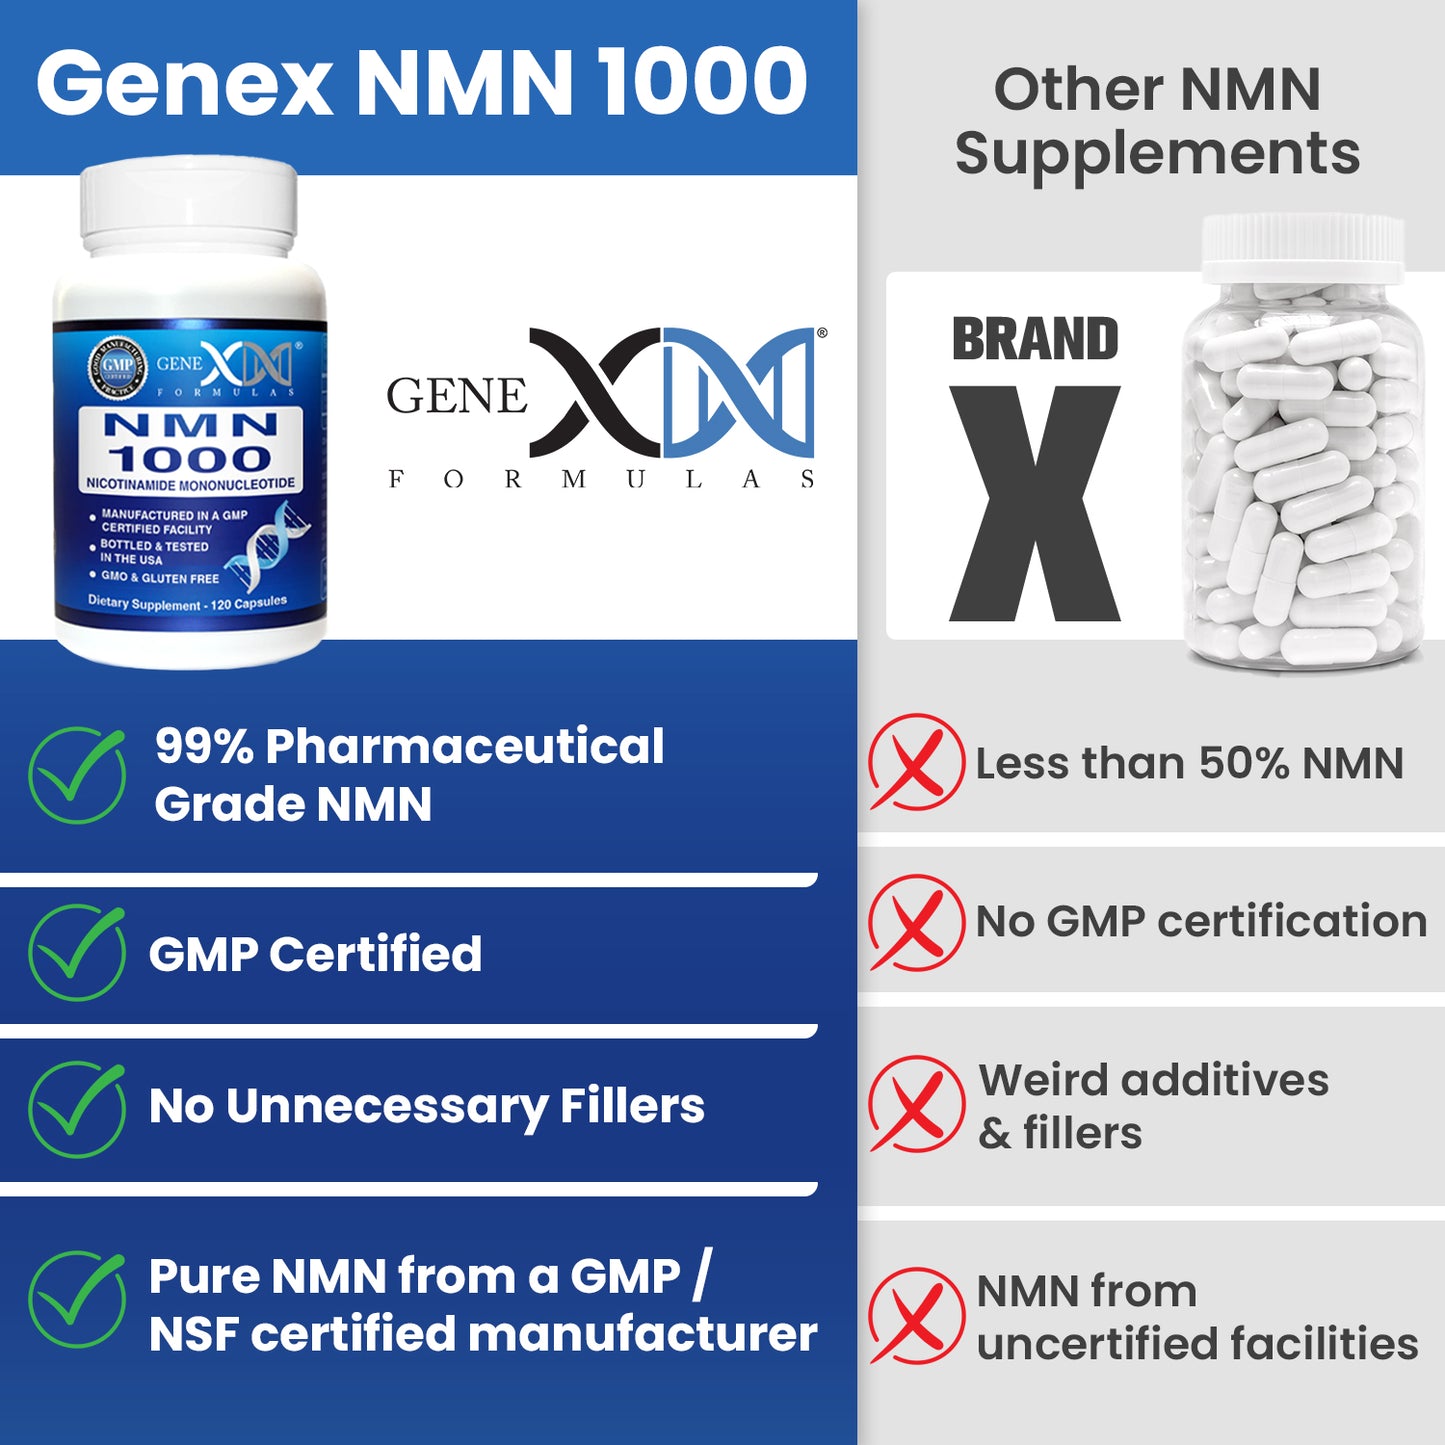 NMNs Nicotinamide Mononucleotide 1000mg (120 Capsules)